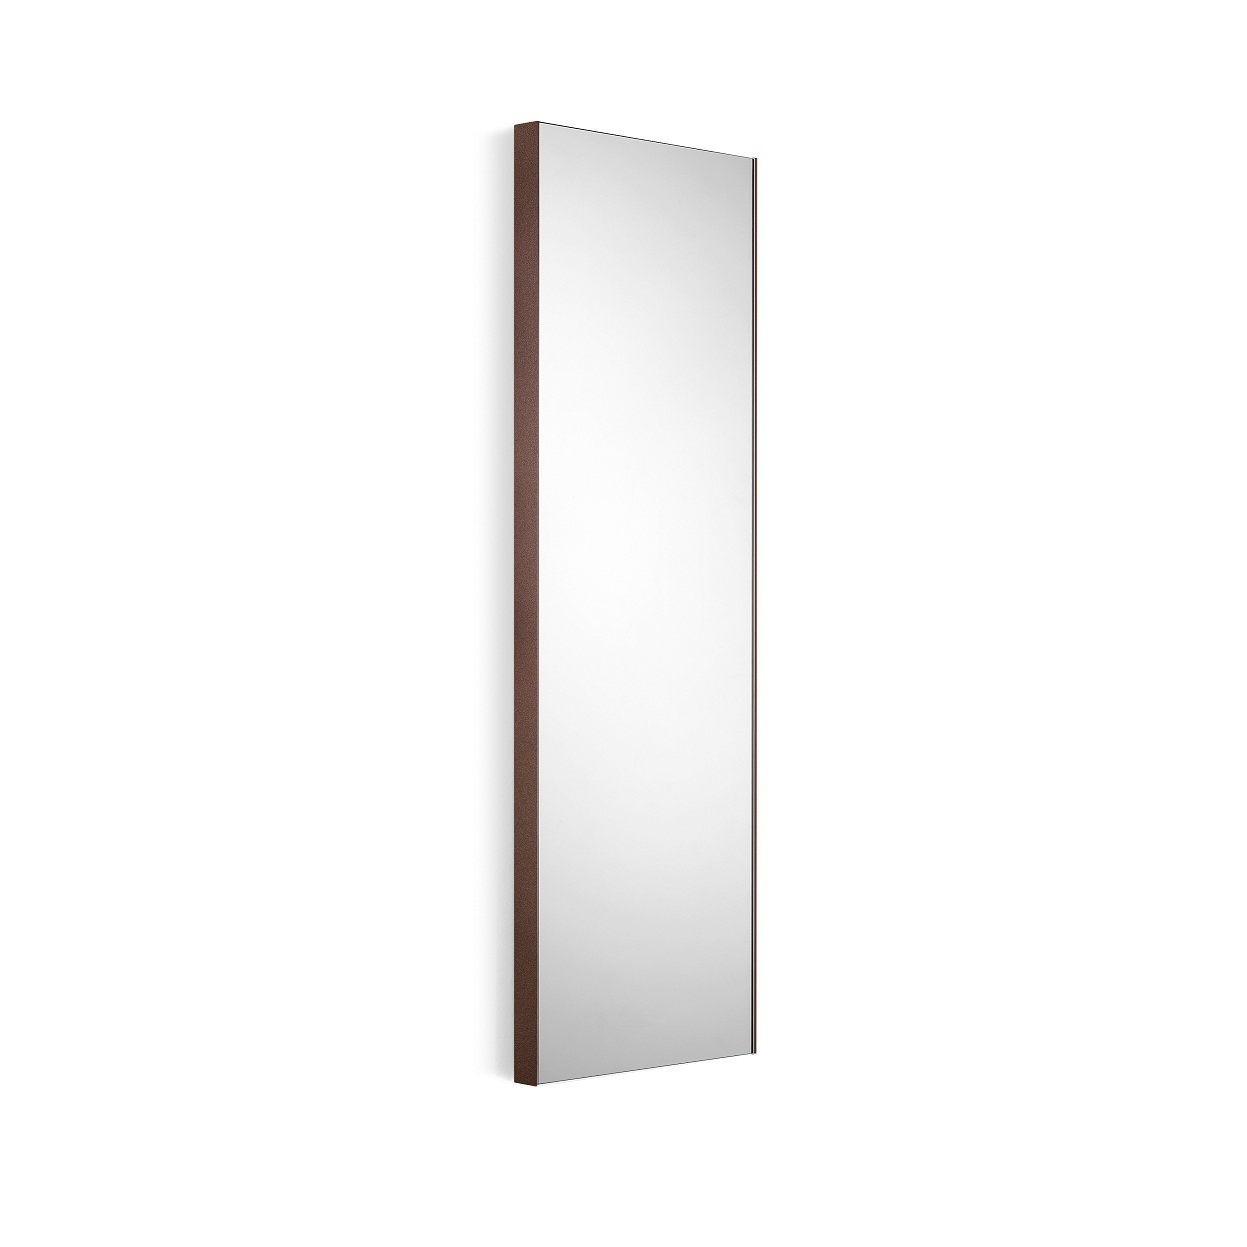 Speci 5373 mirror rust frame